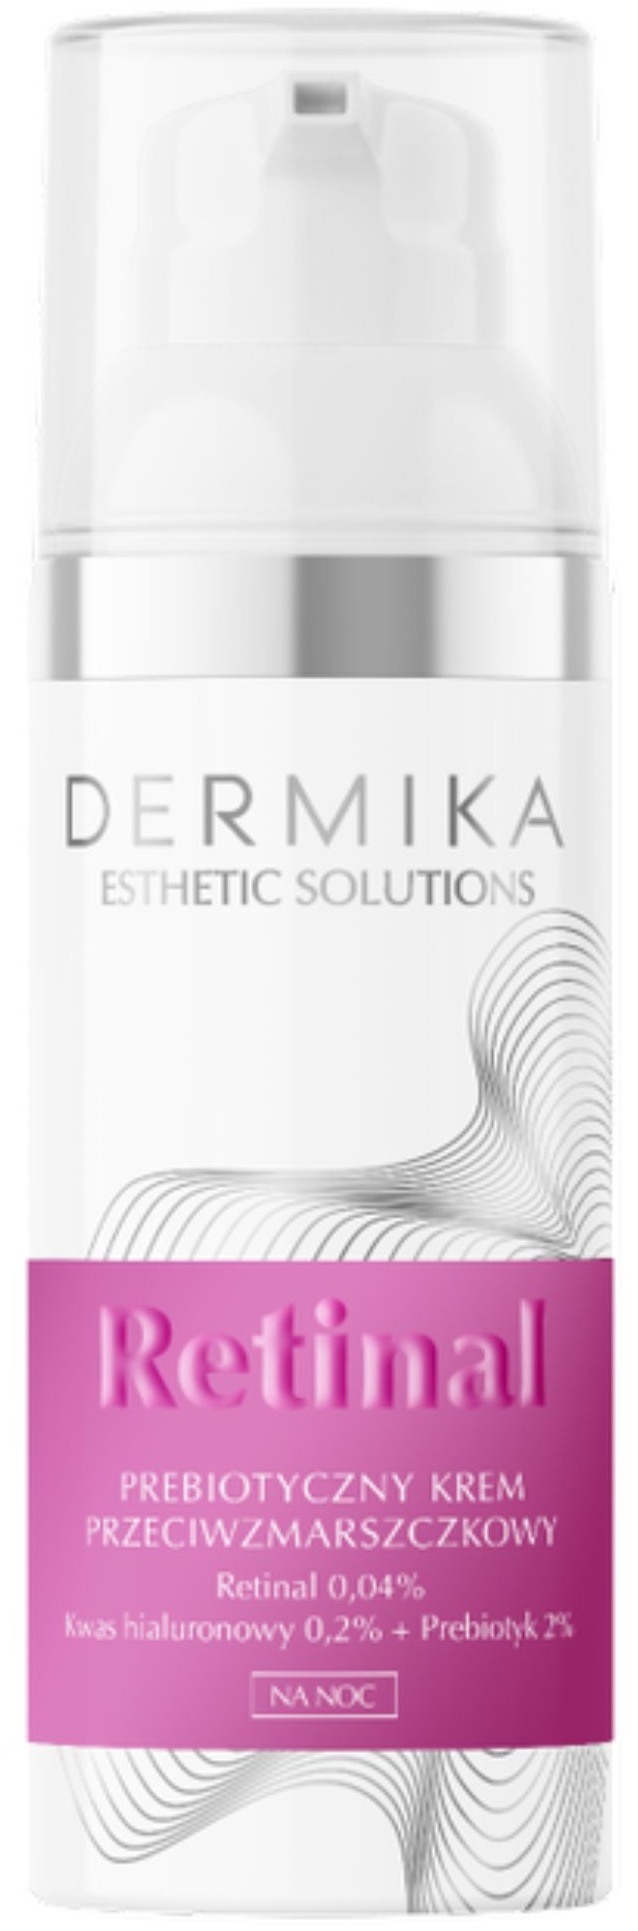 Dermika Esthetic Solutions Retinal Prebiotic Anti-Wrinkle Cream